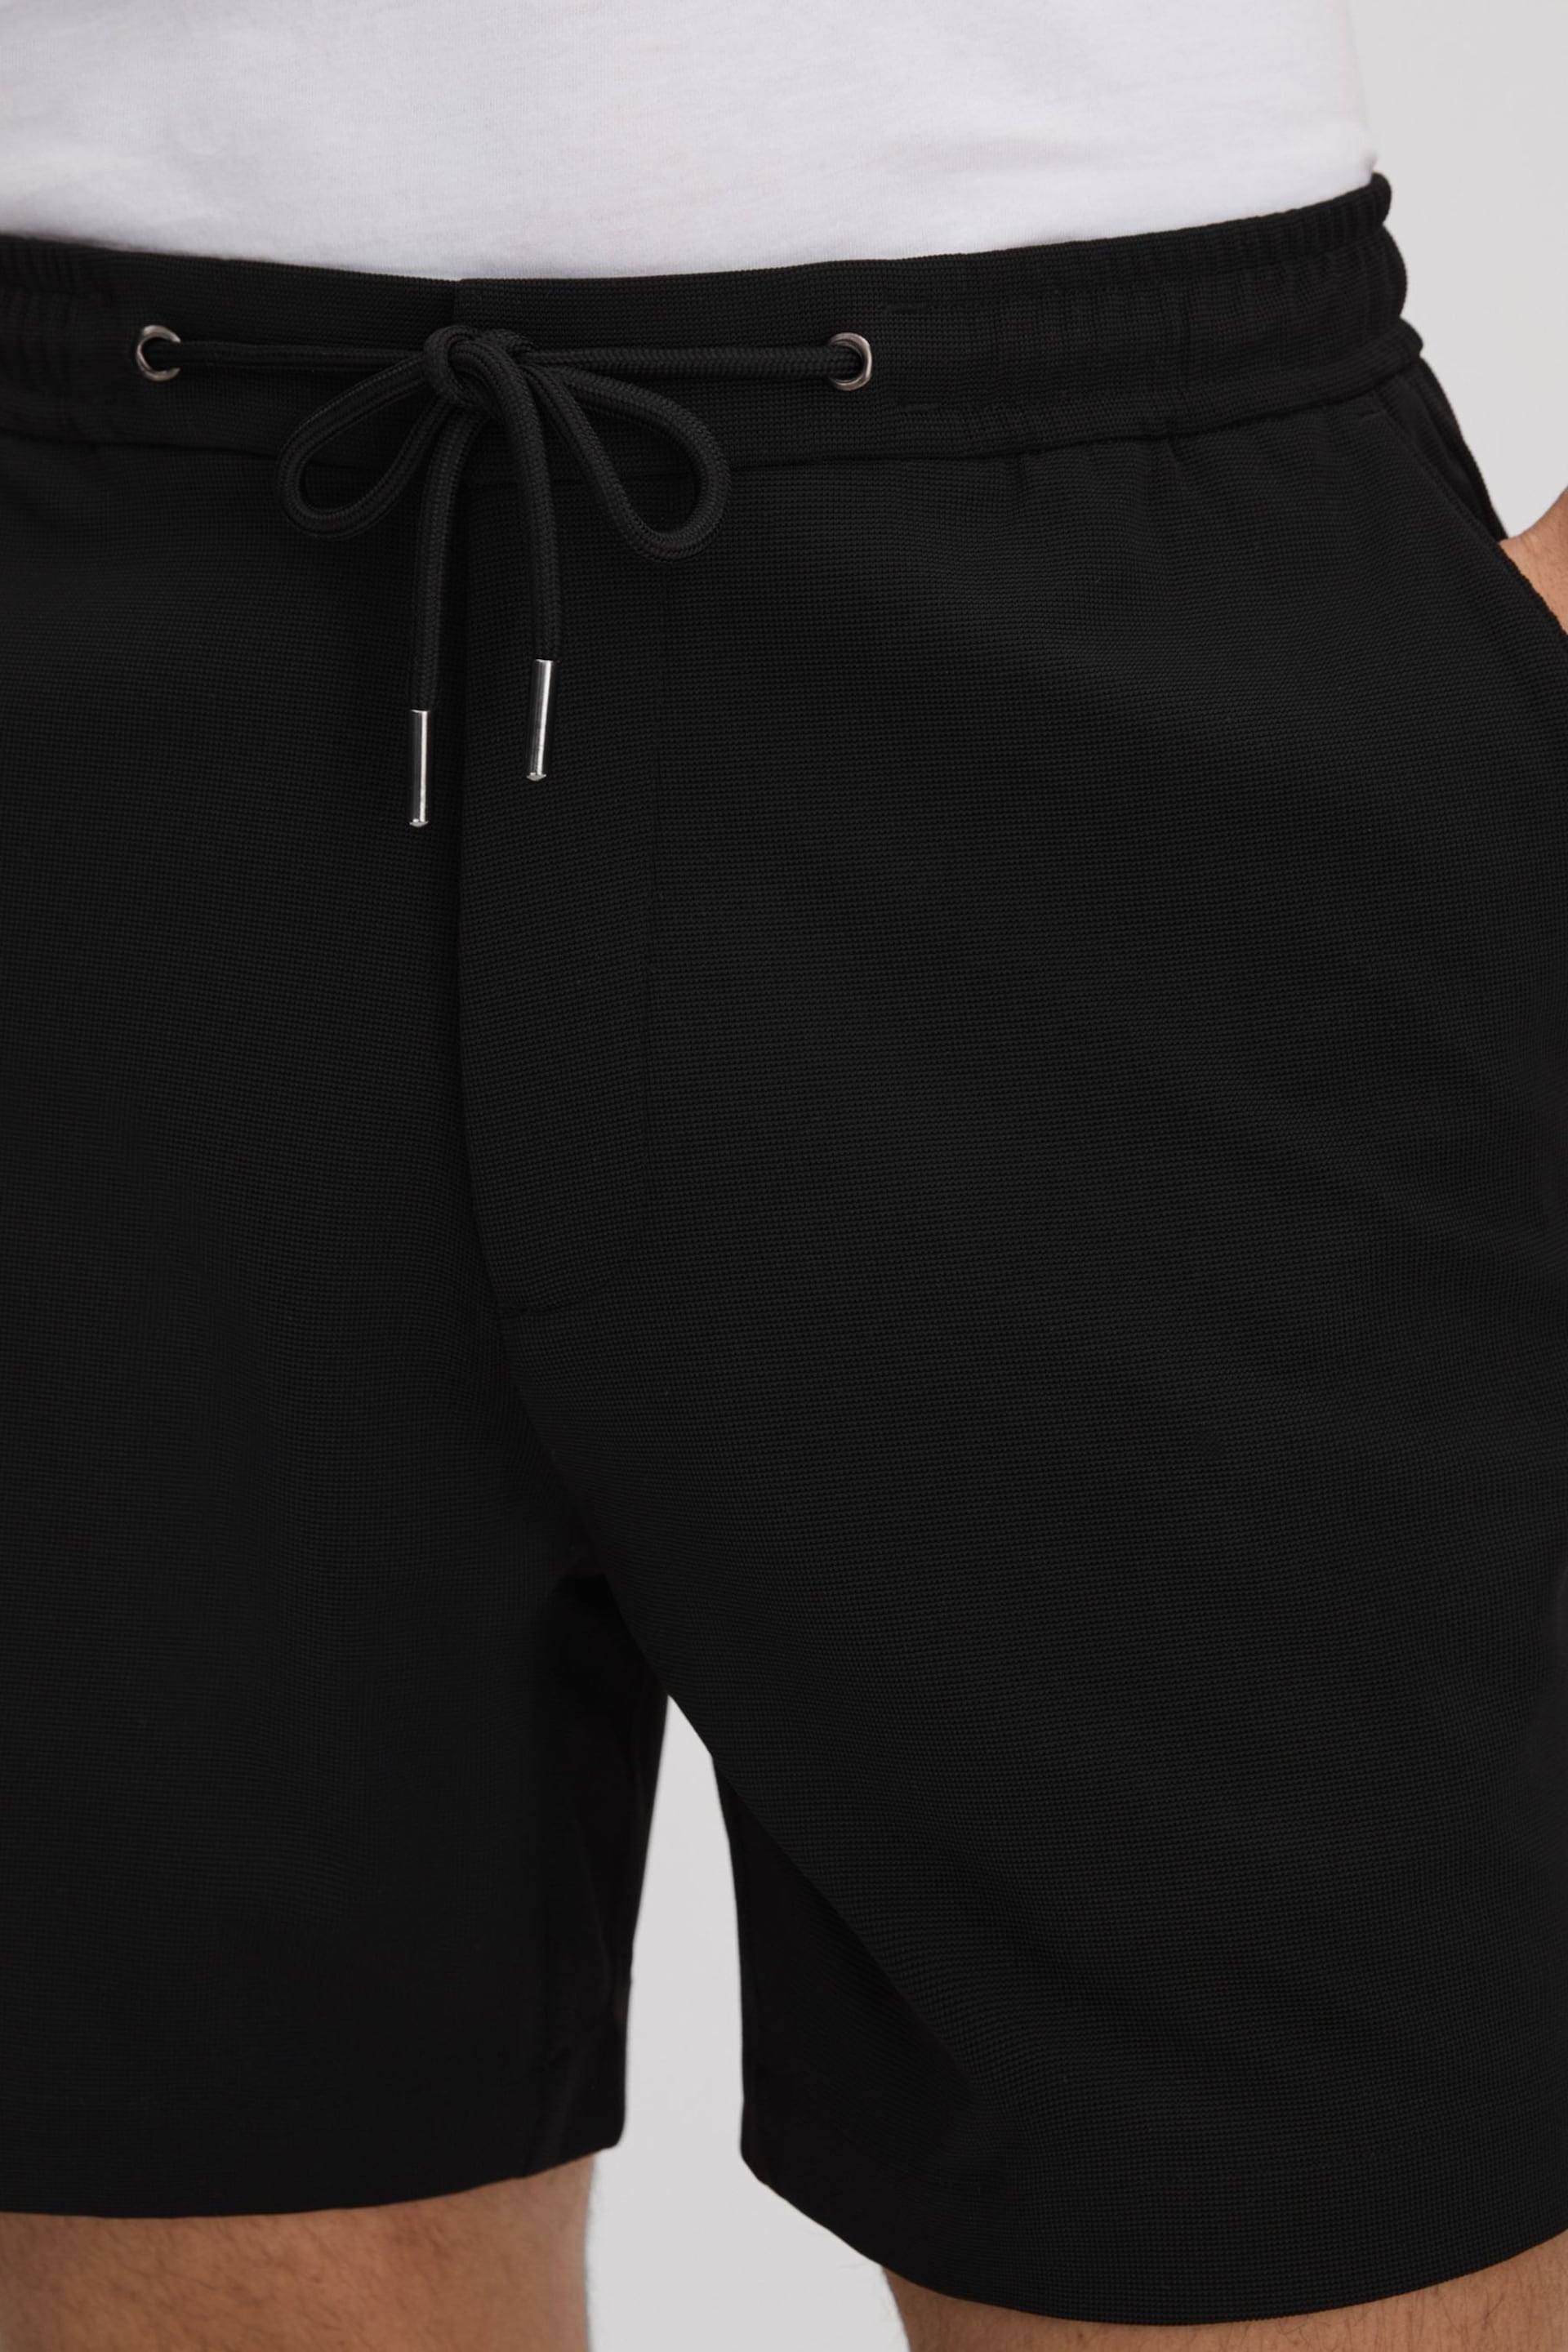 Reiss Black Newmark Textured Drawstring Shorts - Image 4 of 6